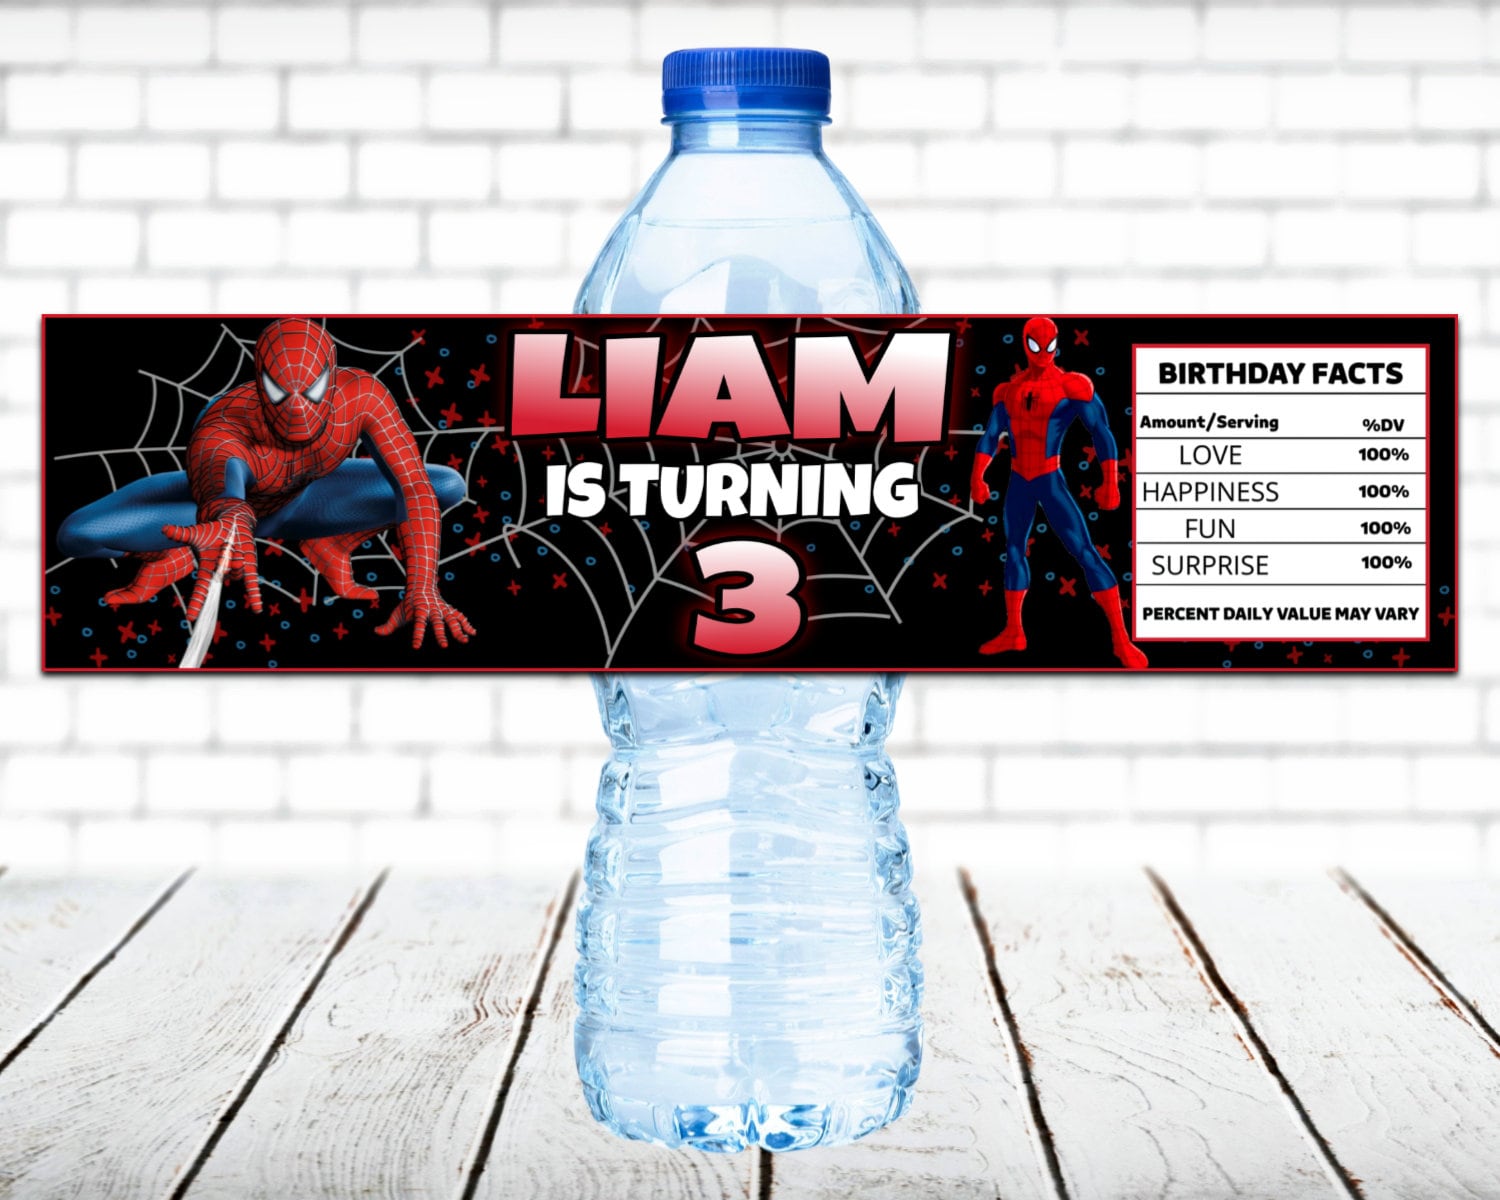 Marvel Spider-Man Spidey Heartbreaker Stainless Steel Water Bottle